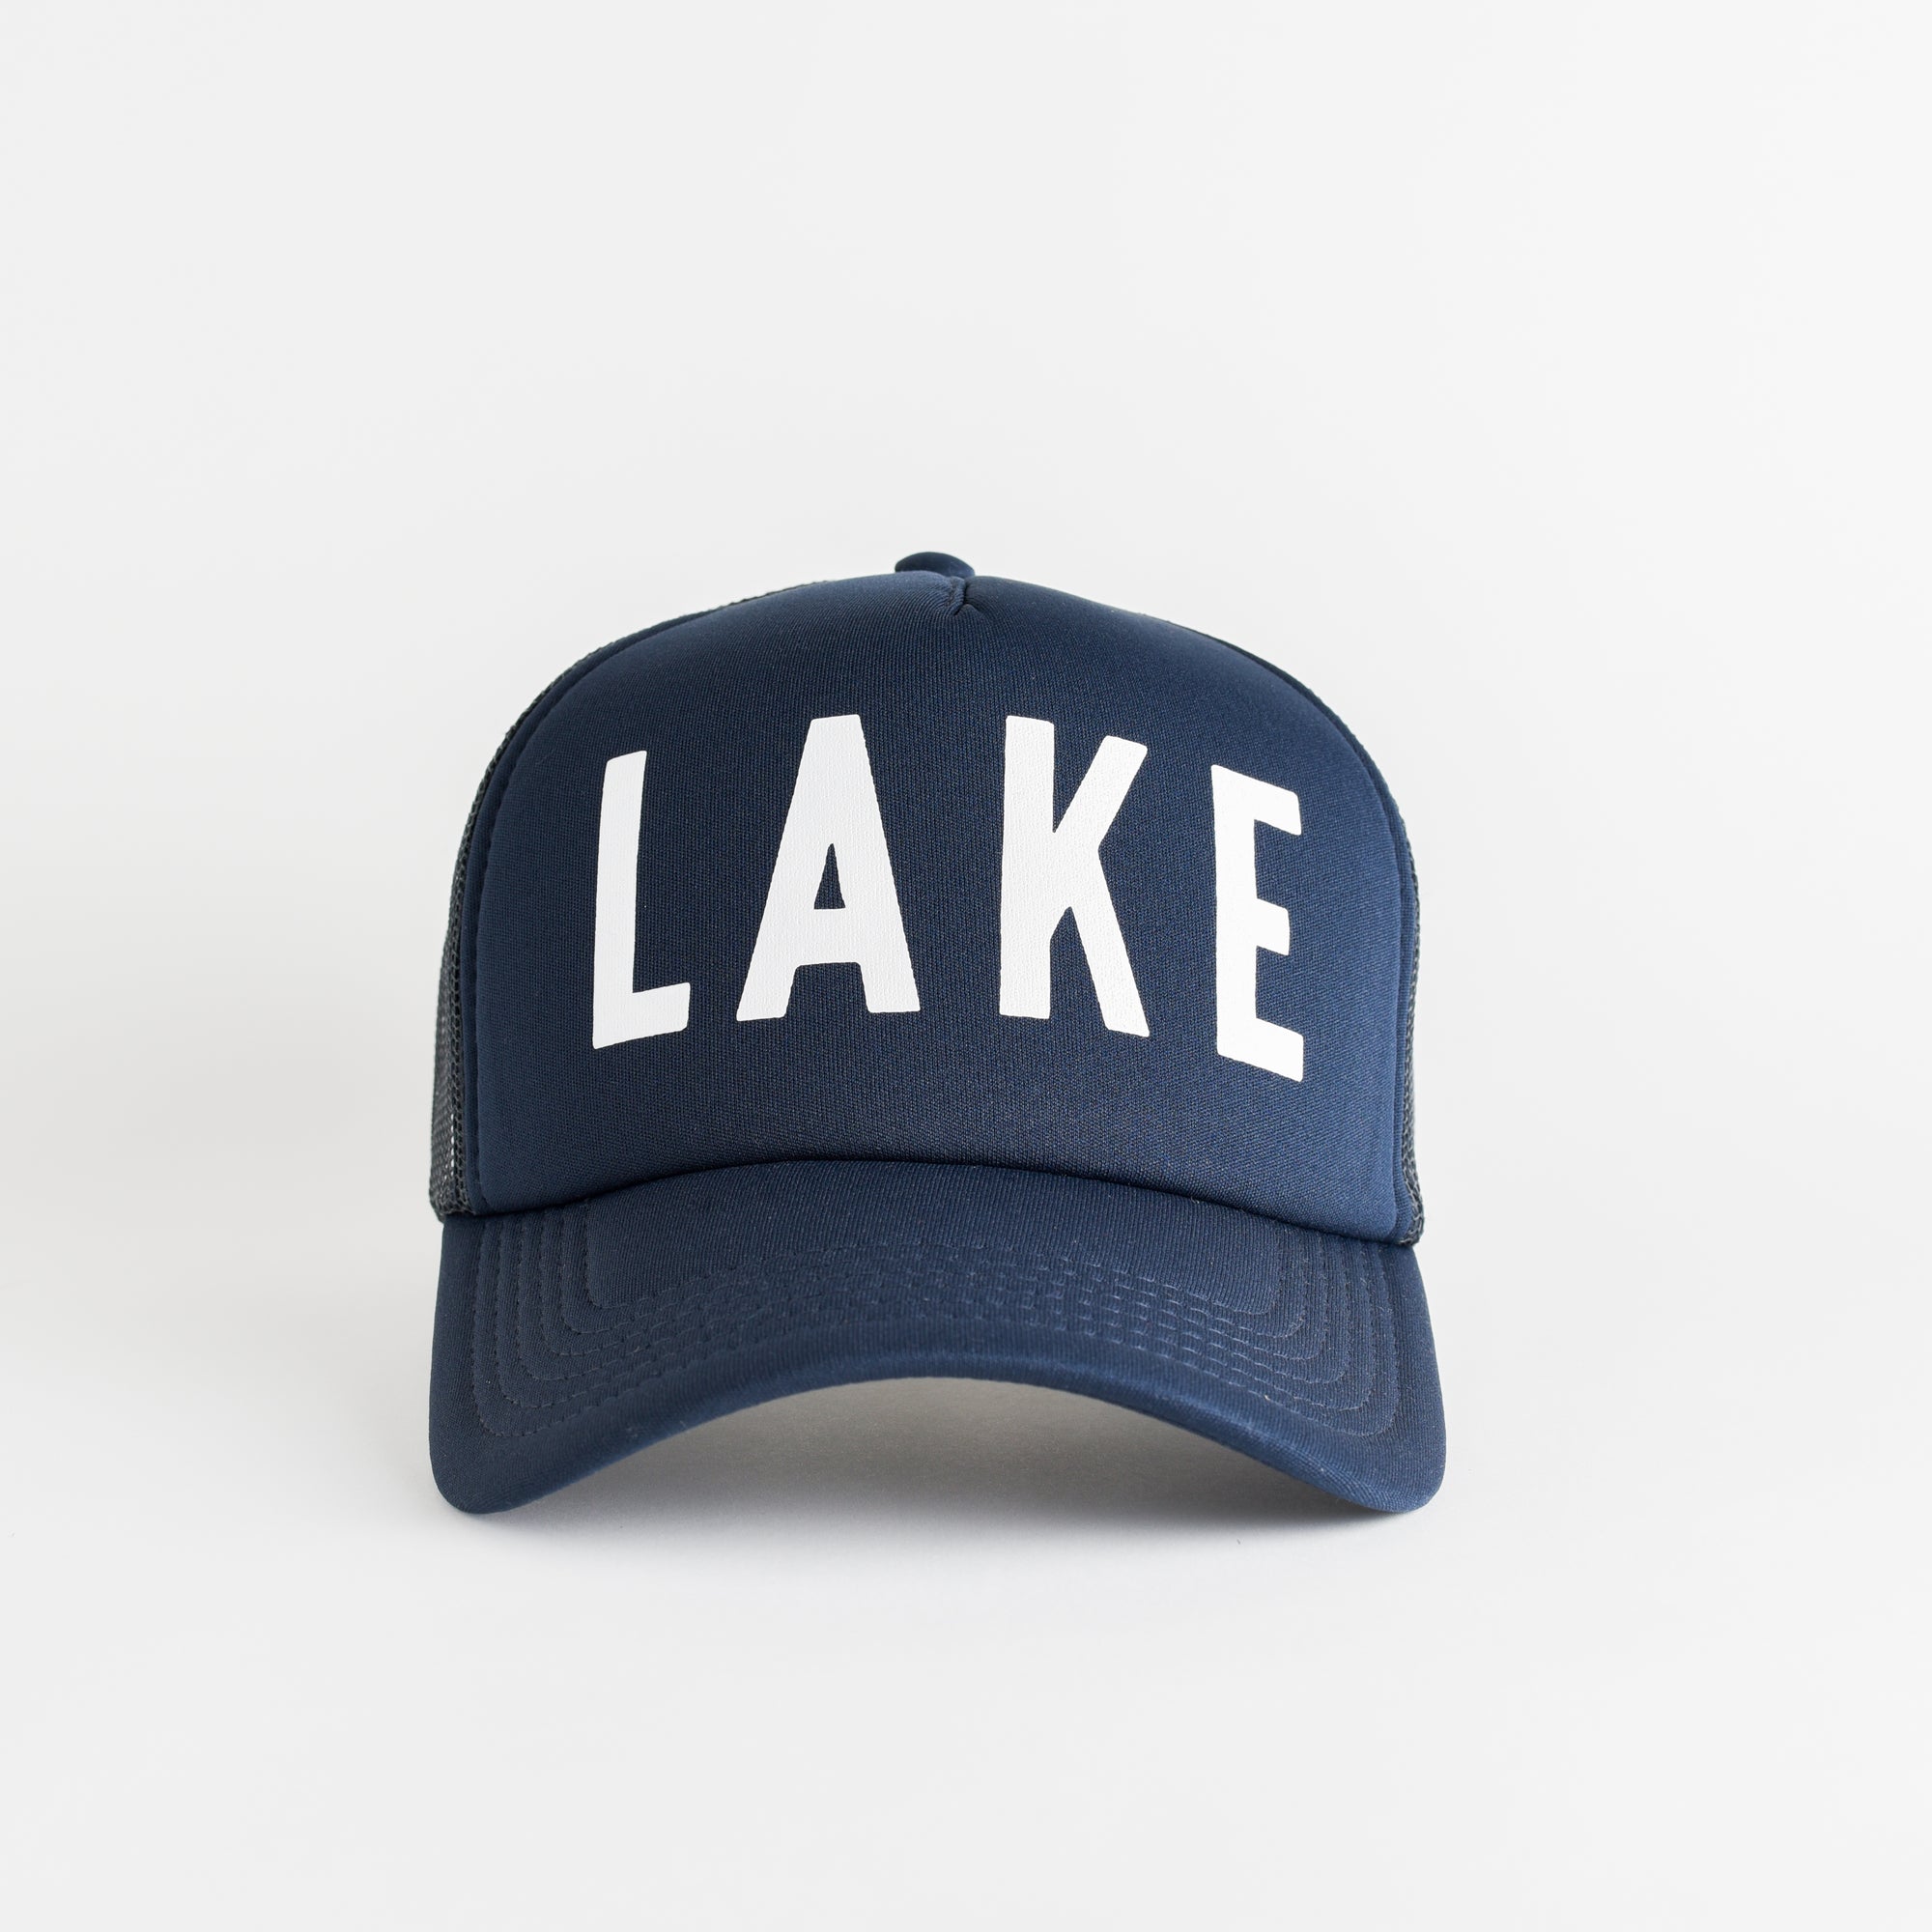 Lake Recycled Trucker Hat - navy